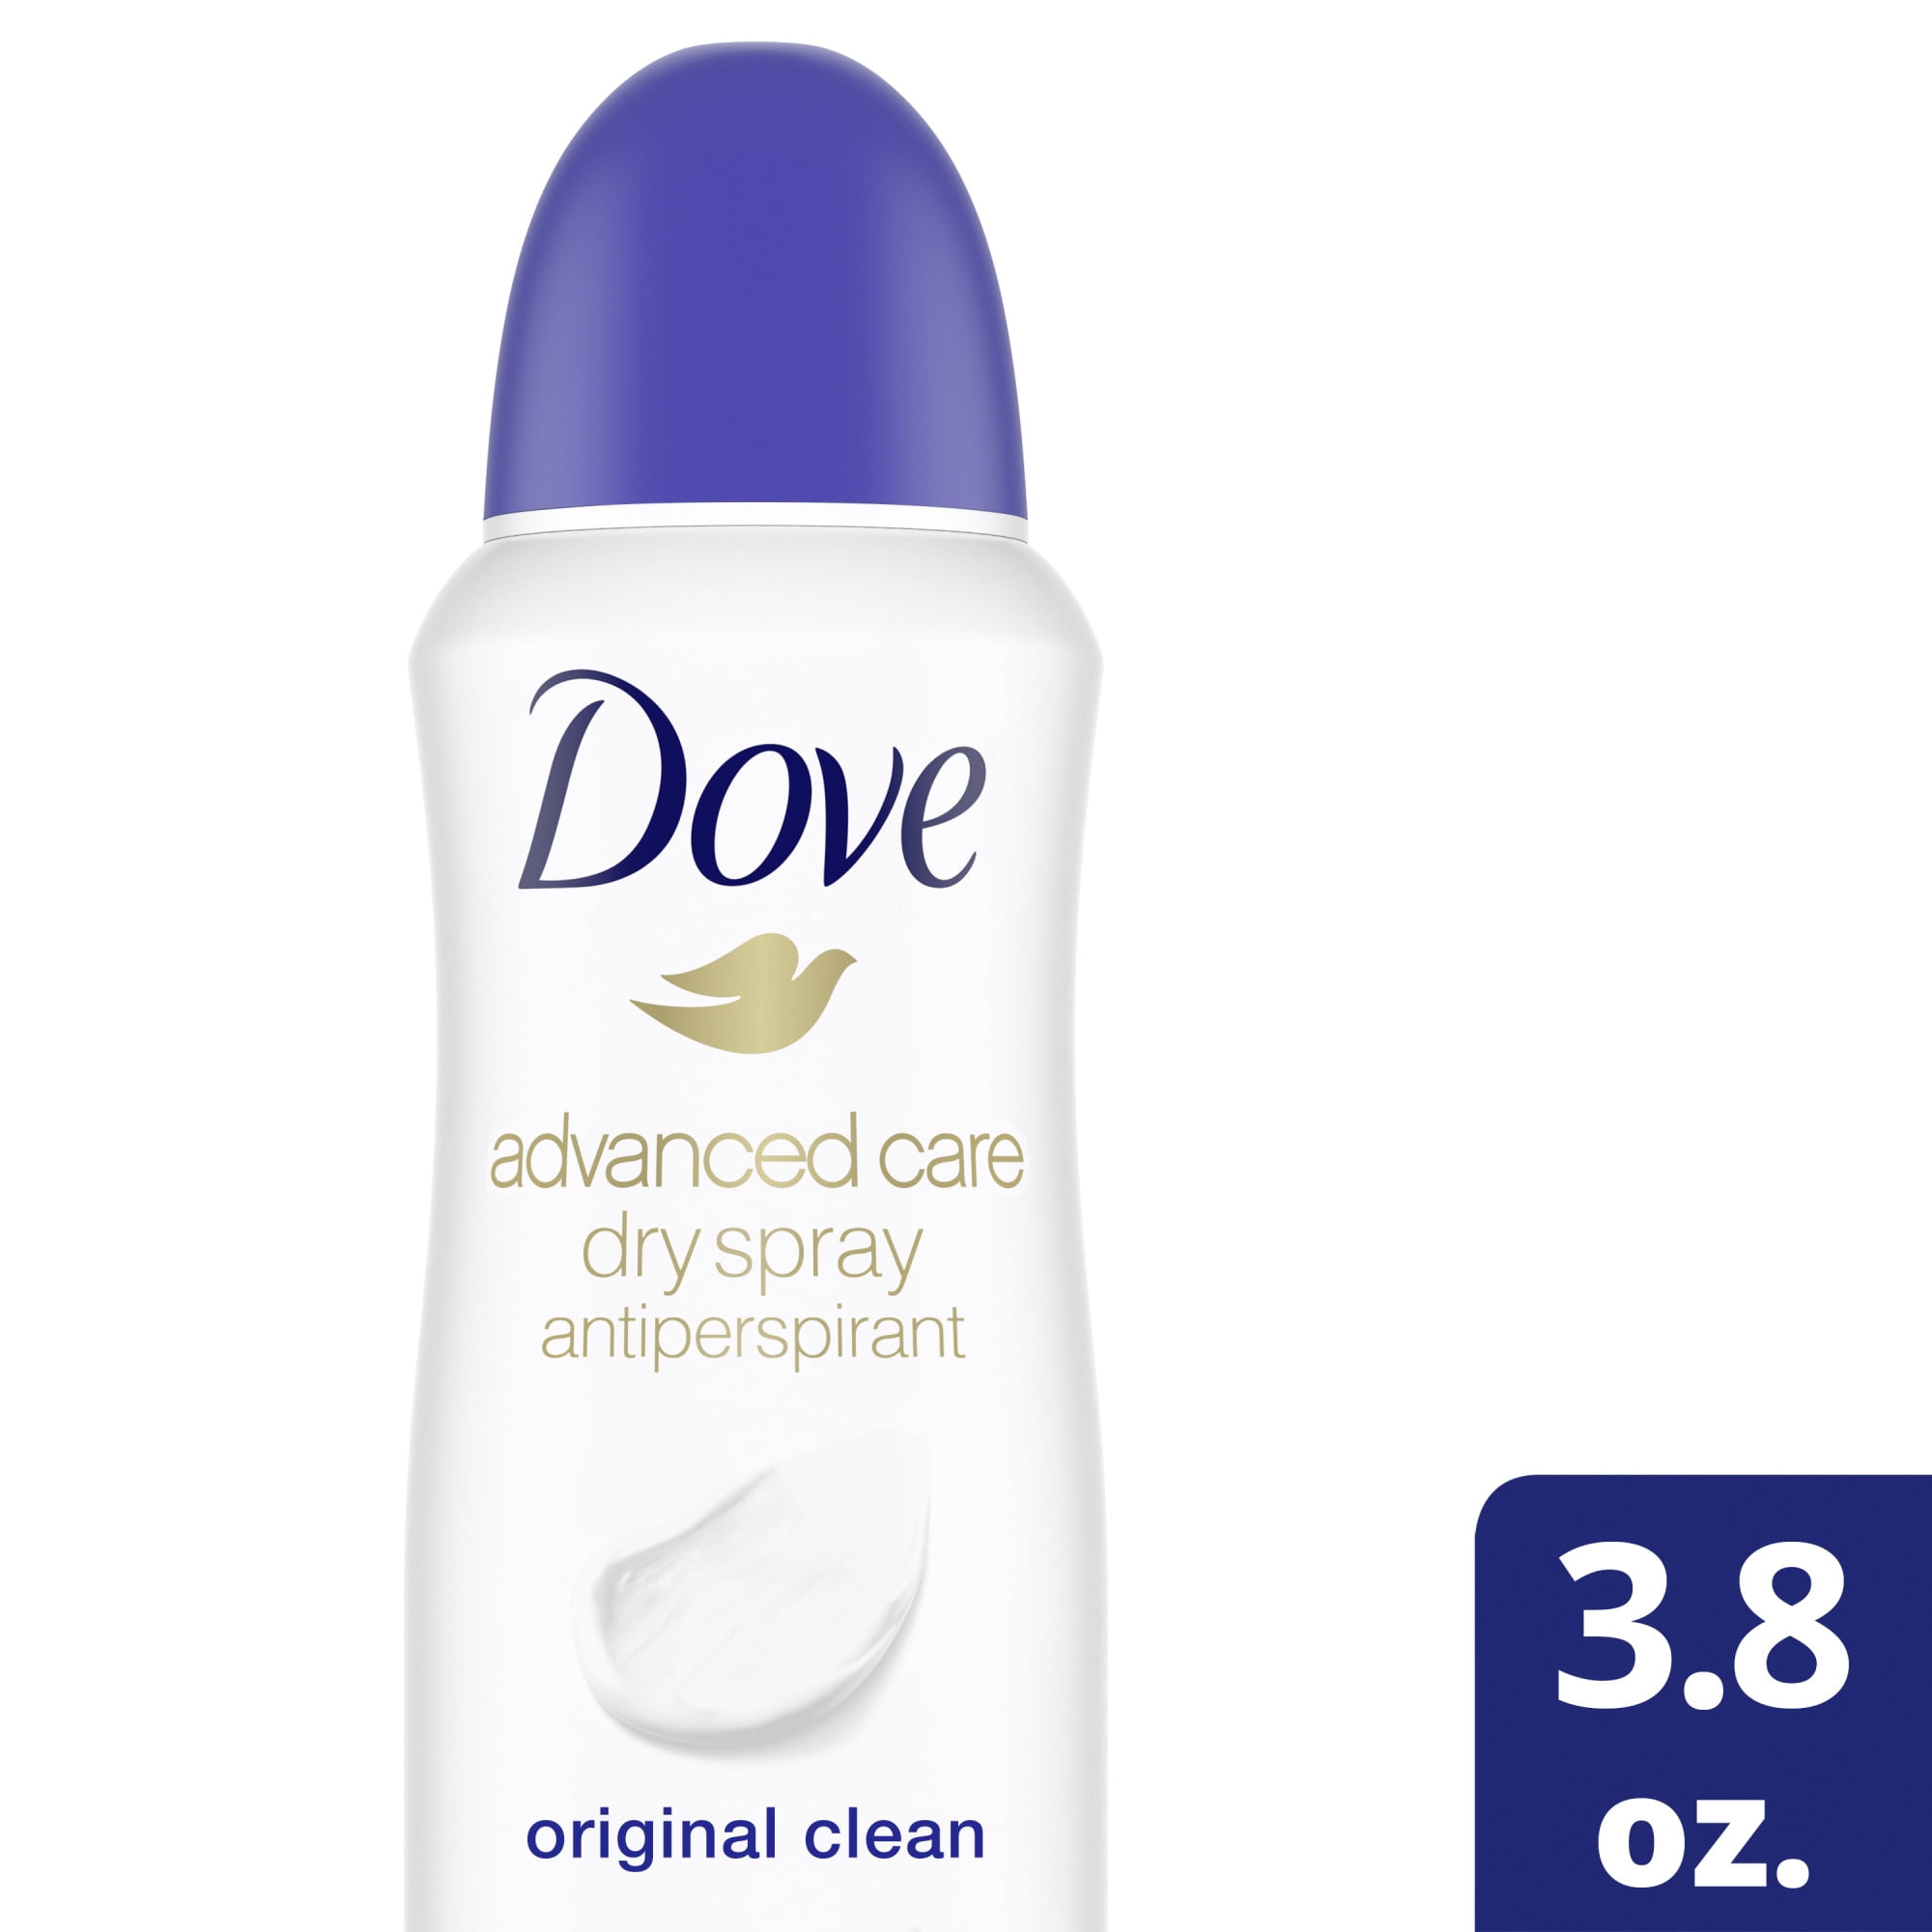 Dove Advanced Care Dry Spray Antiperspirant Deodorant Original Clean 3